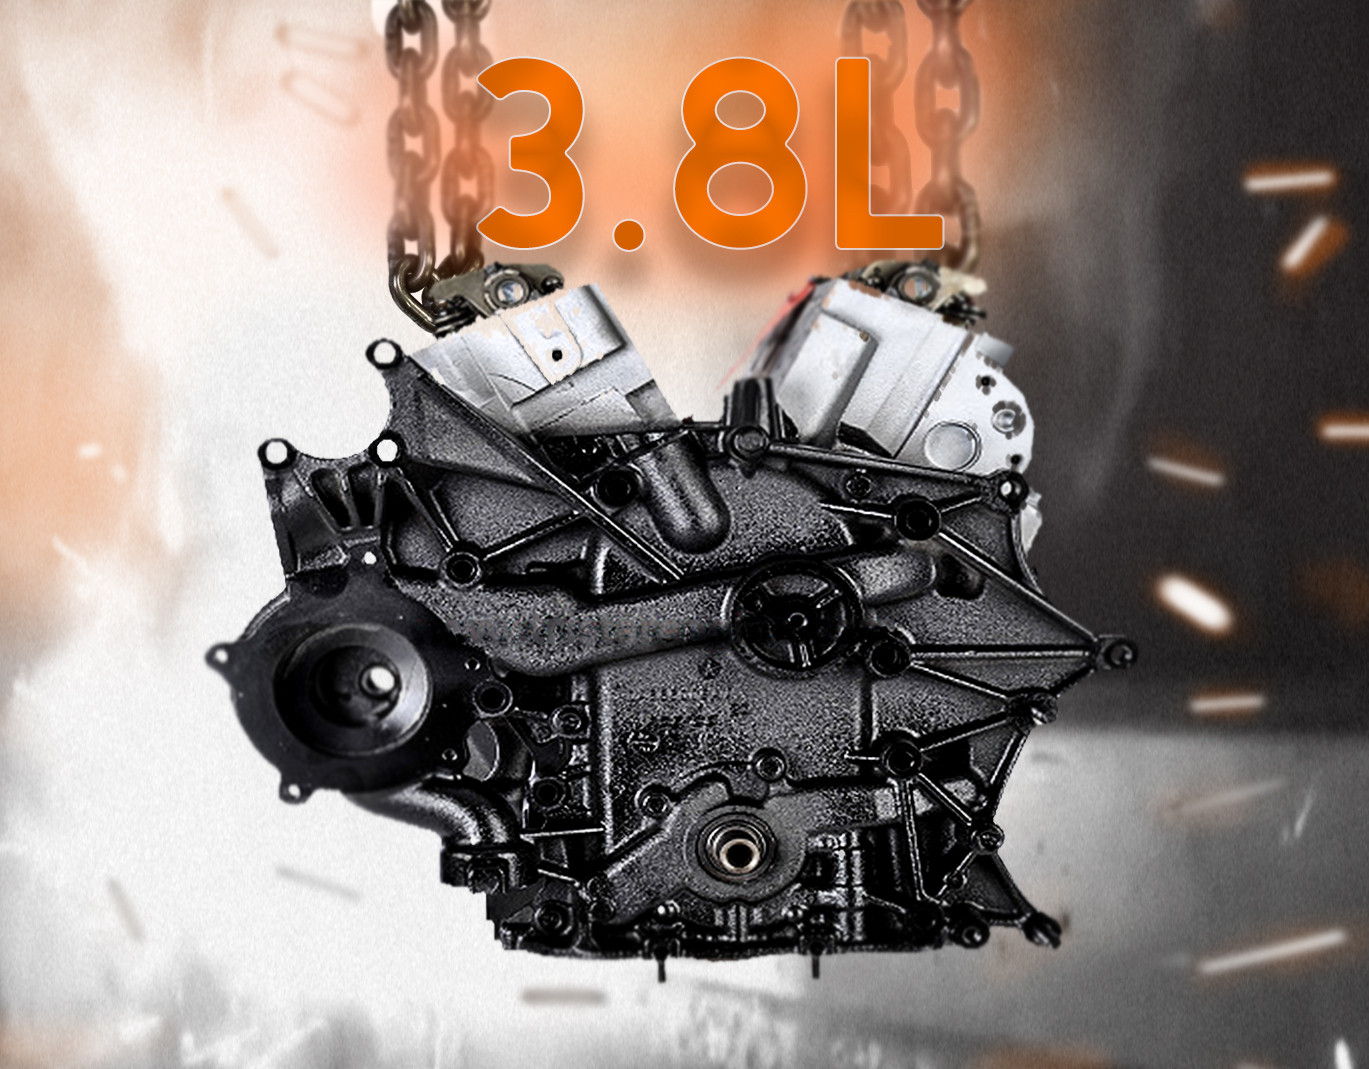 Part # 2131 • 3.8L Remanufactured Engine